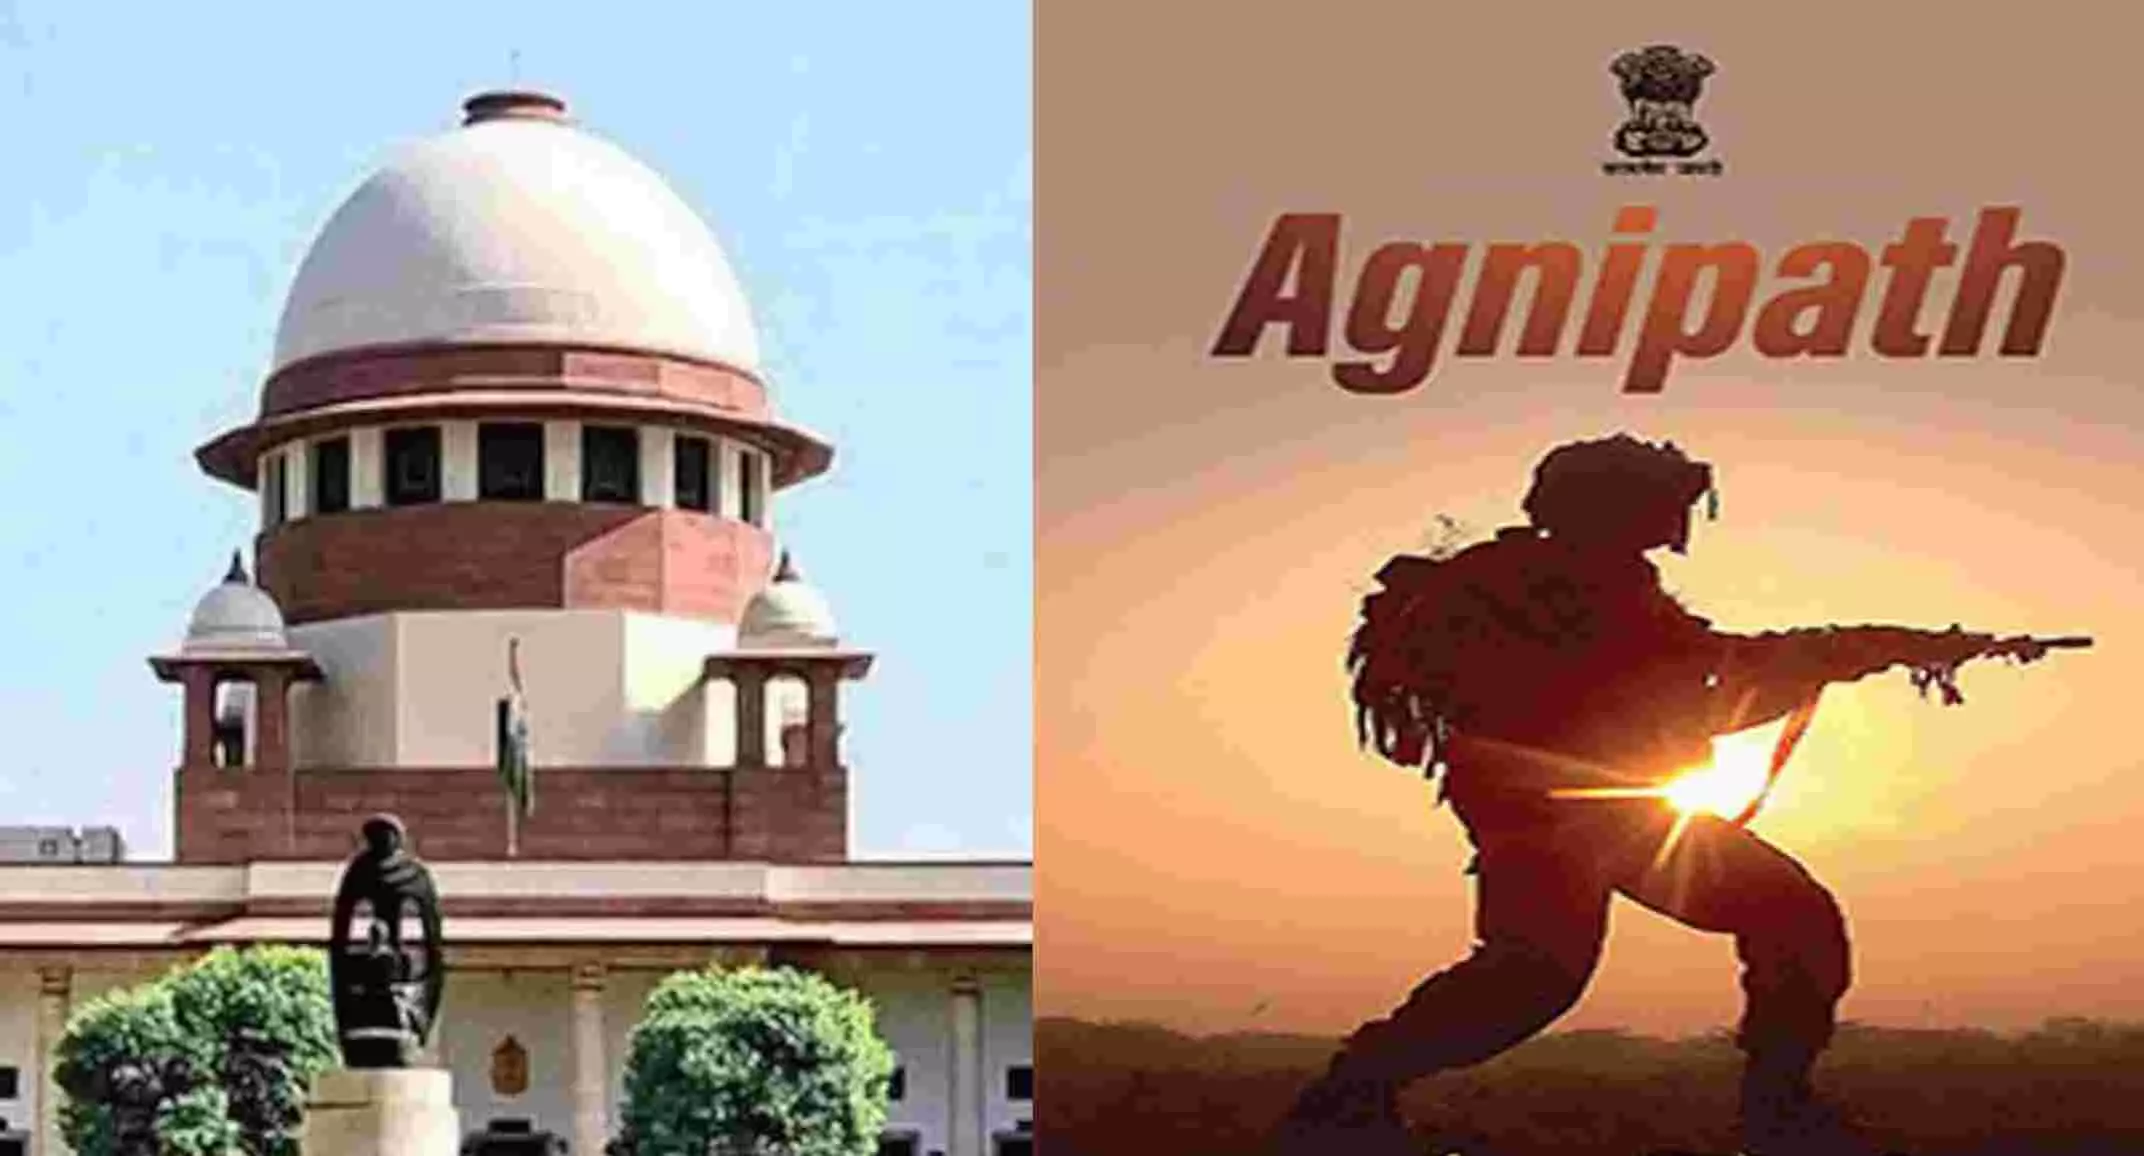 Agnipath scheme: सुप्रीम कोर्ट ने अग्निपथ योजना को चुनौती देने वाली याचिकाएं की खारिज